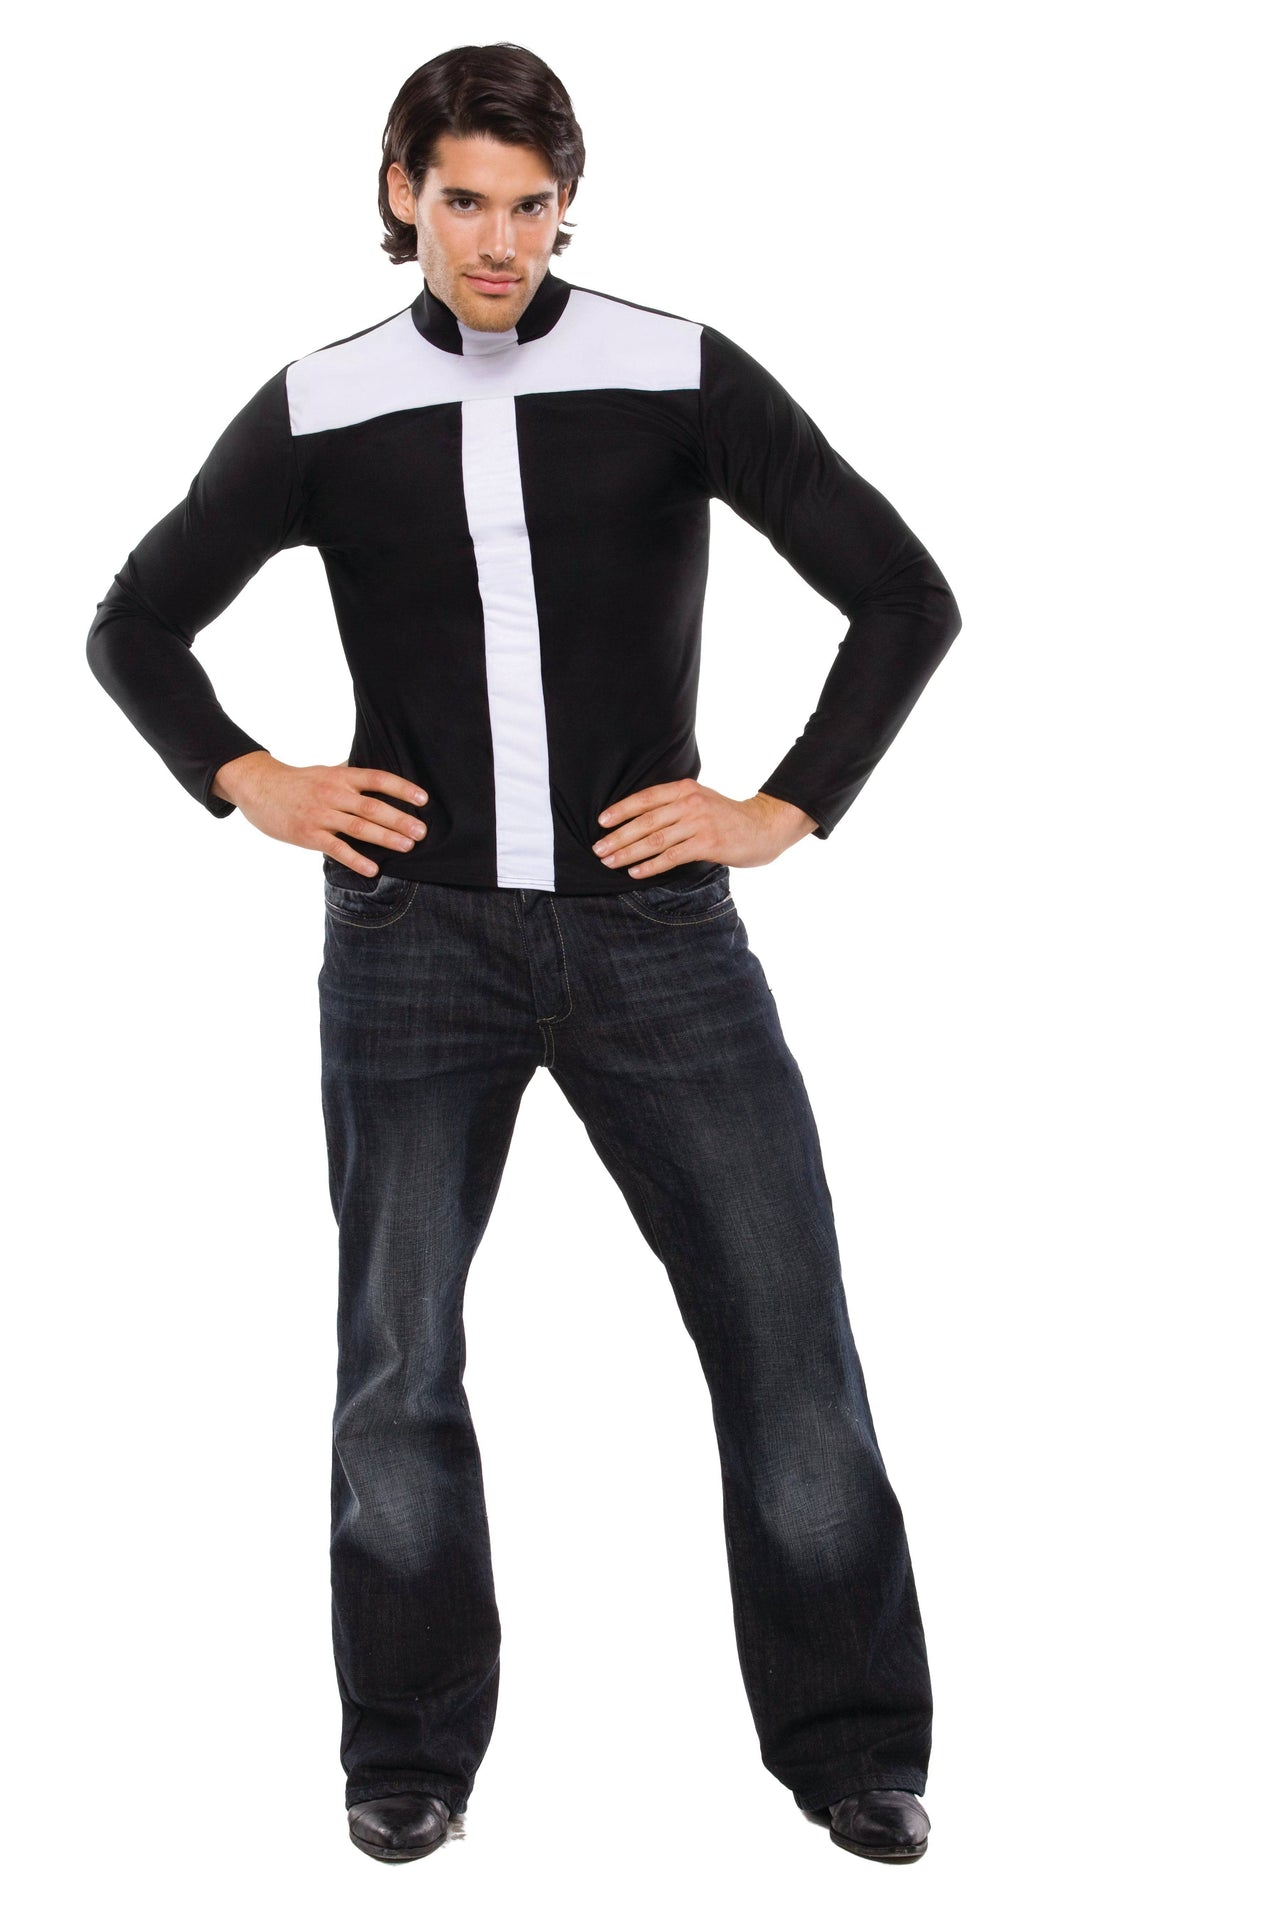 Coquette - M6527 - Sexy Priest Shirt Costume - Black/White - L/XL - Stag Shop